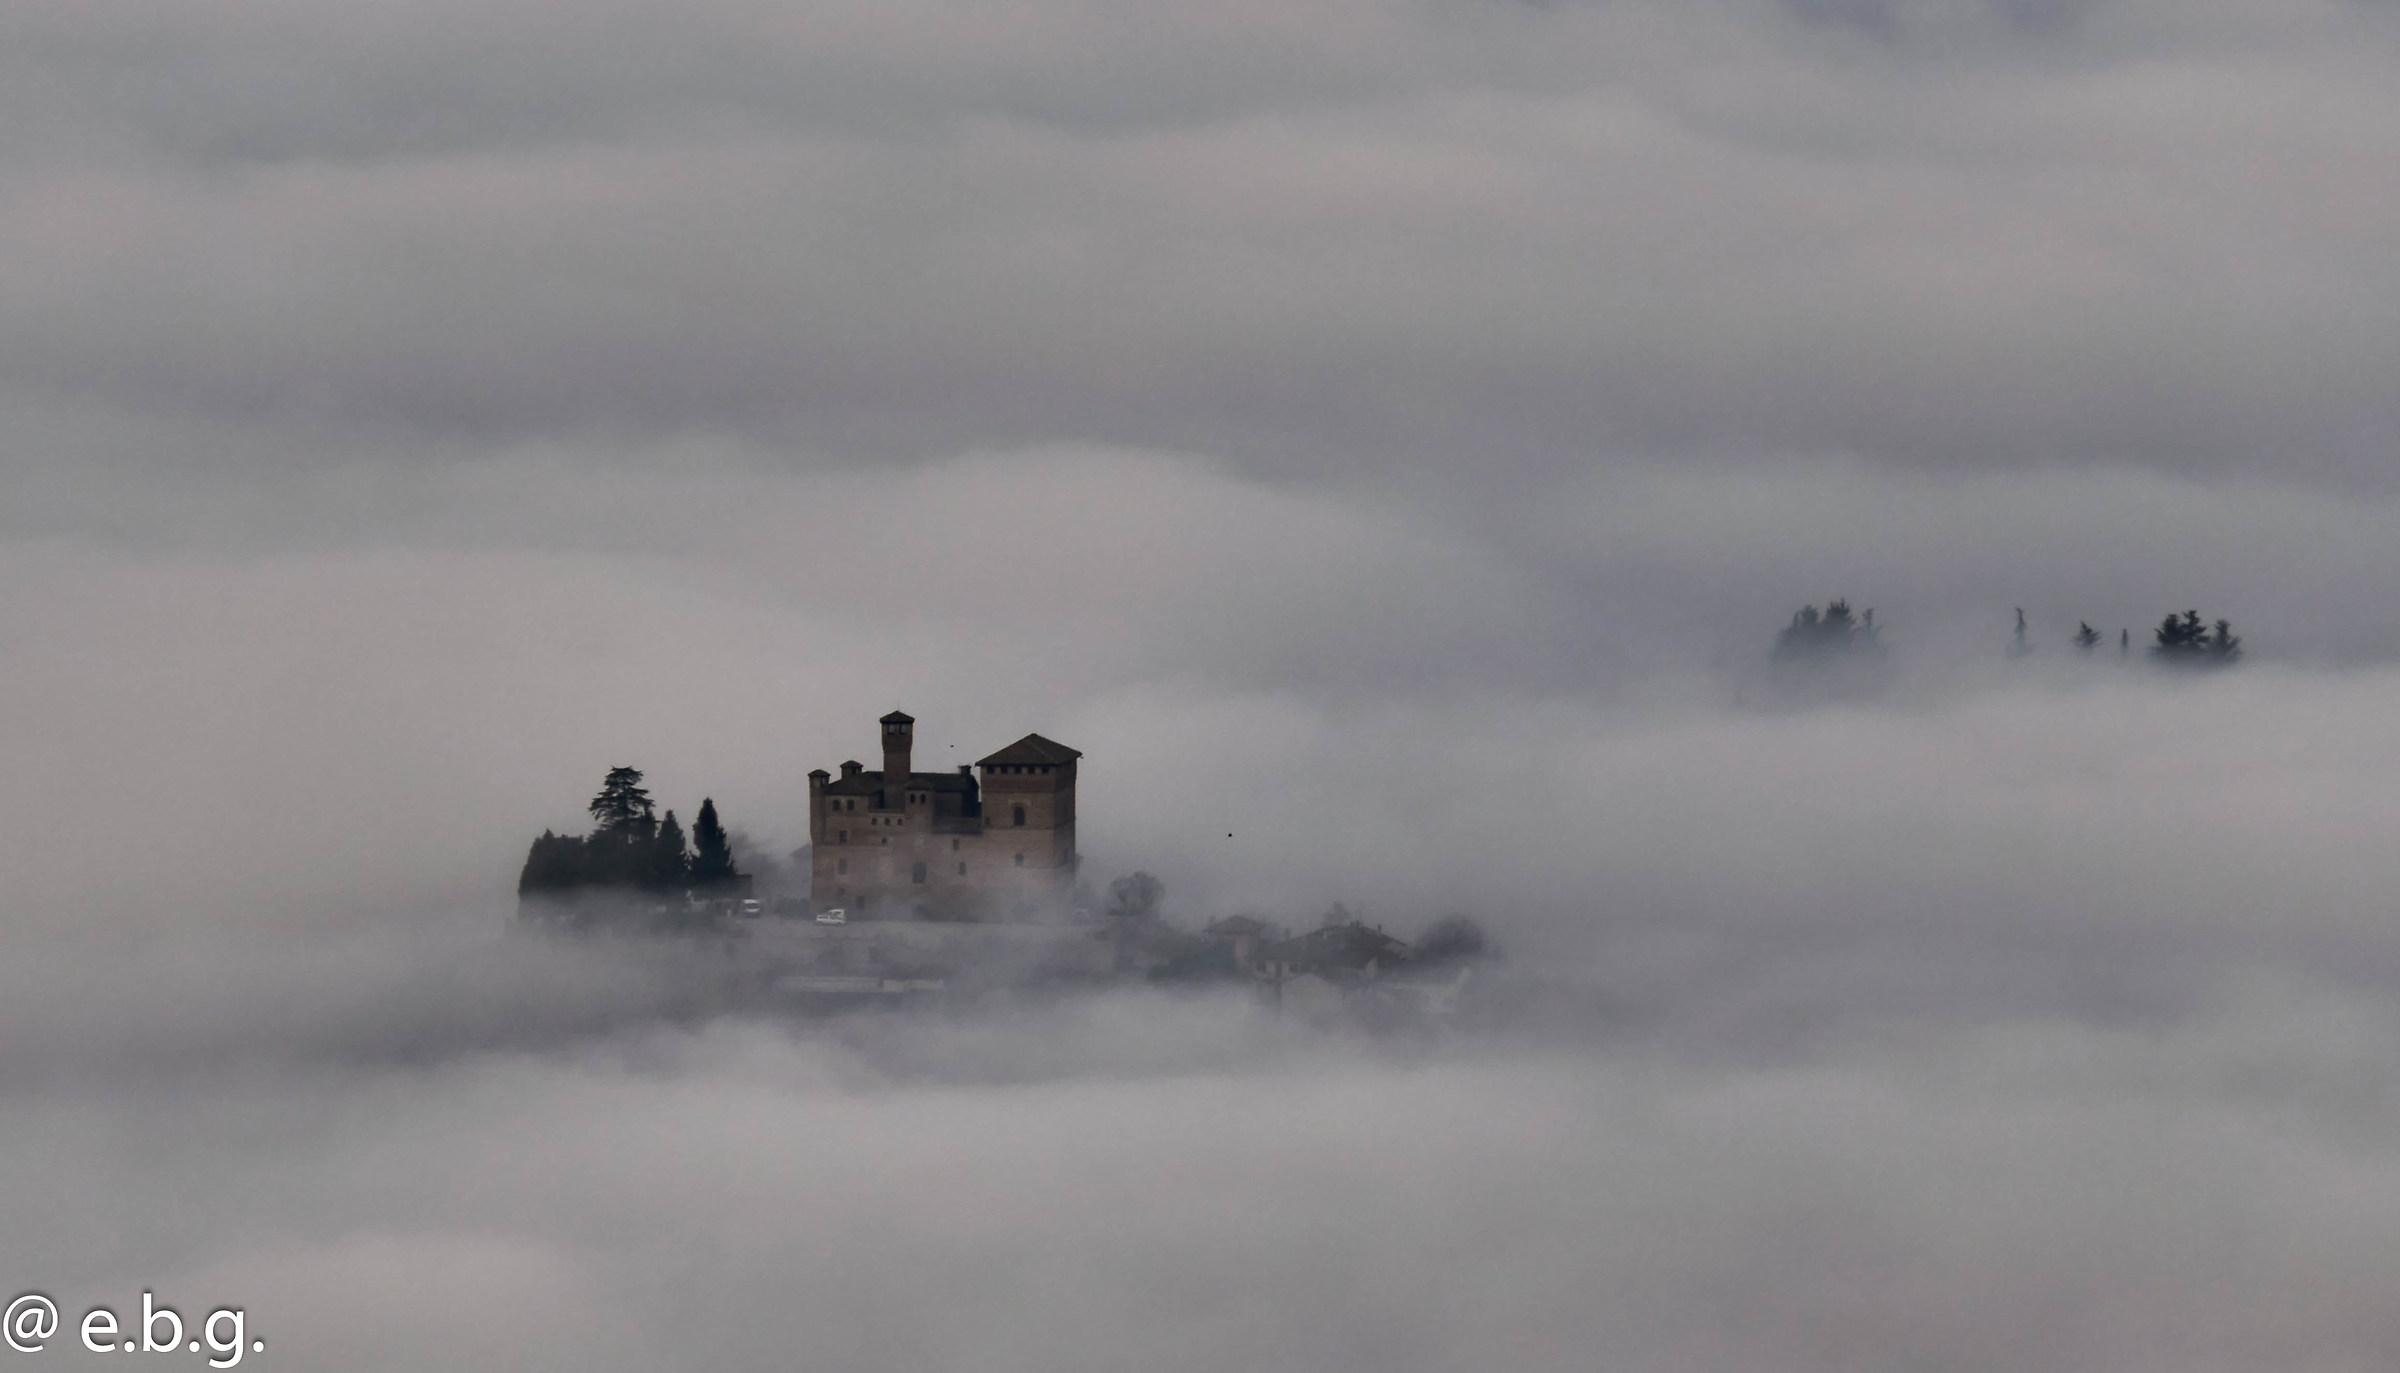 The castle of Grinzane Cavour...